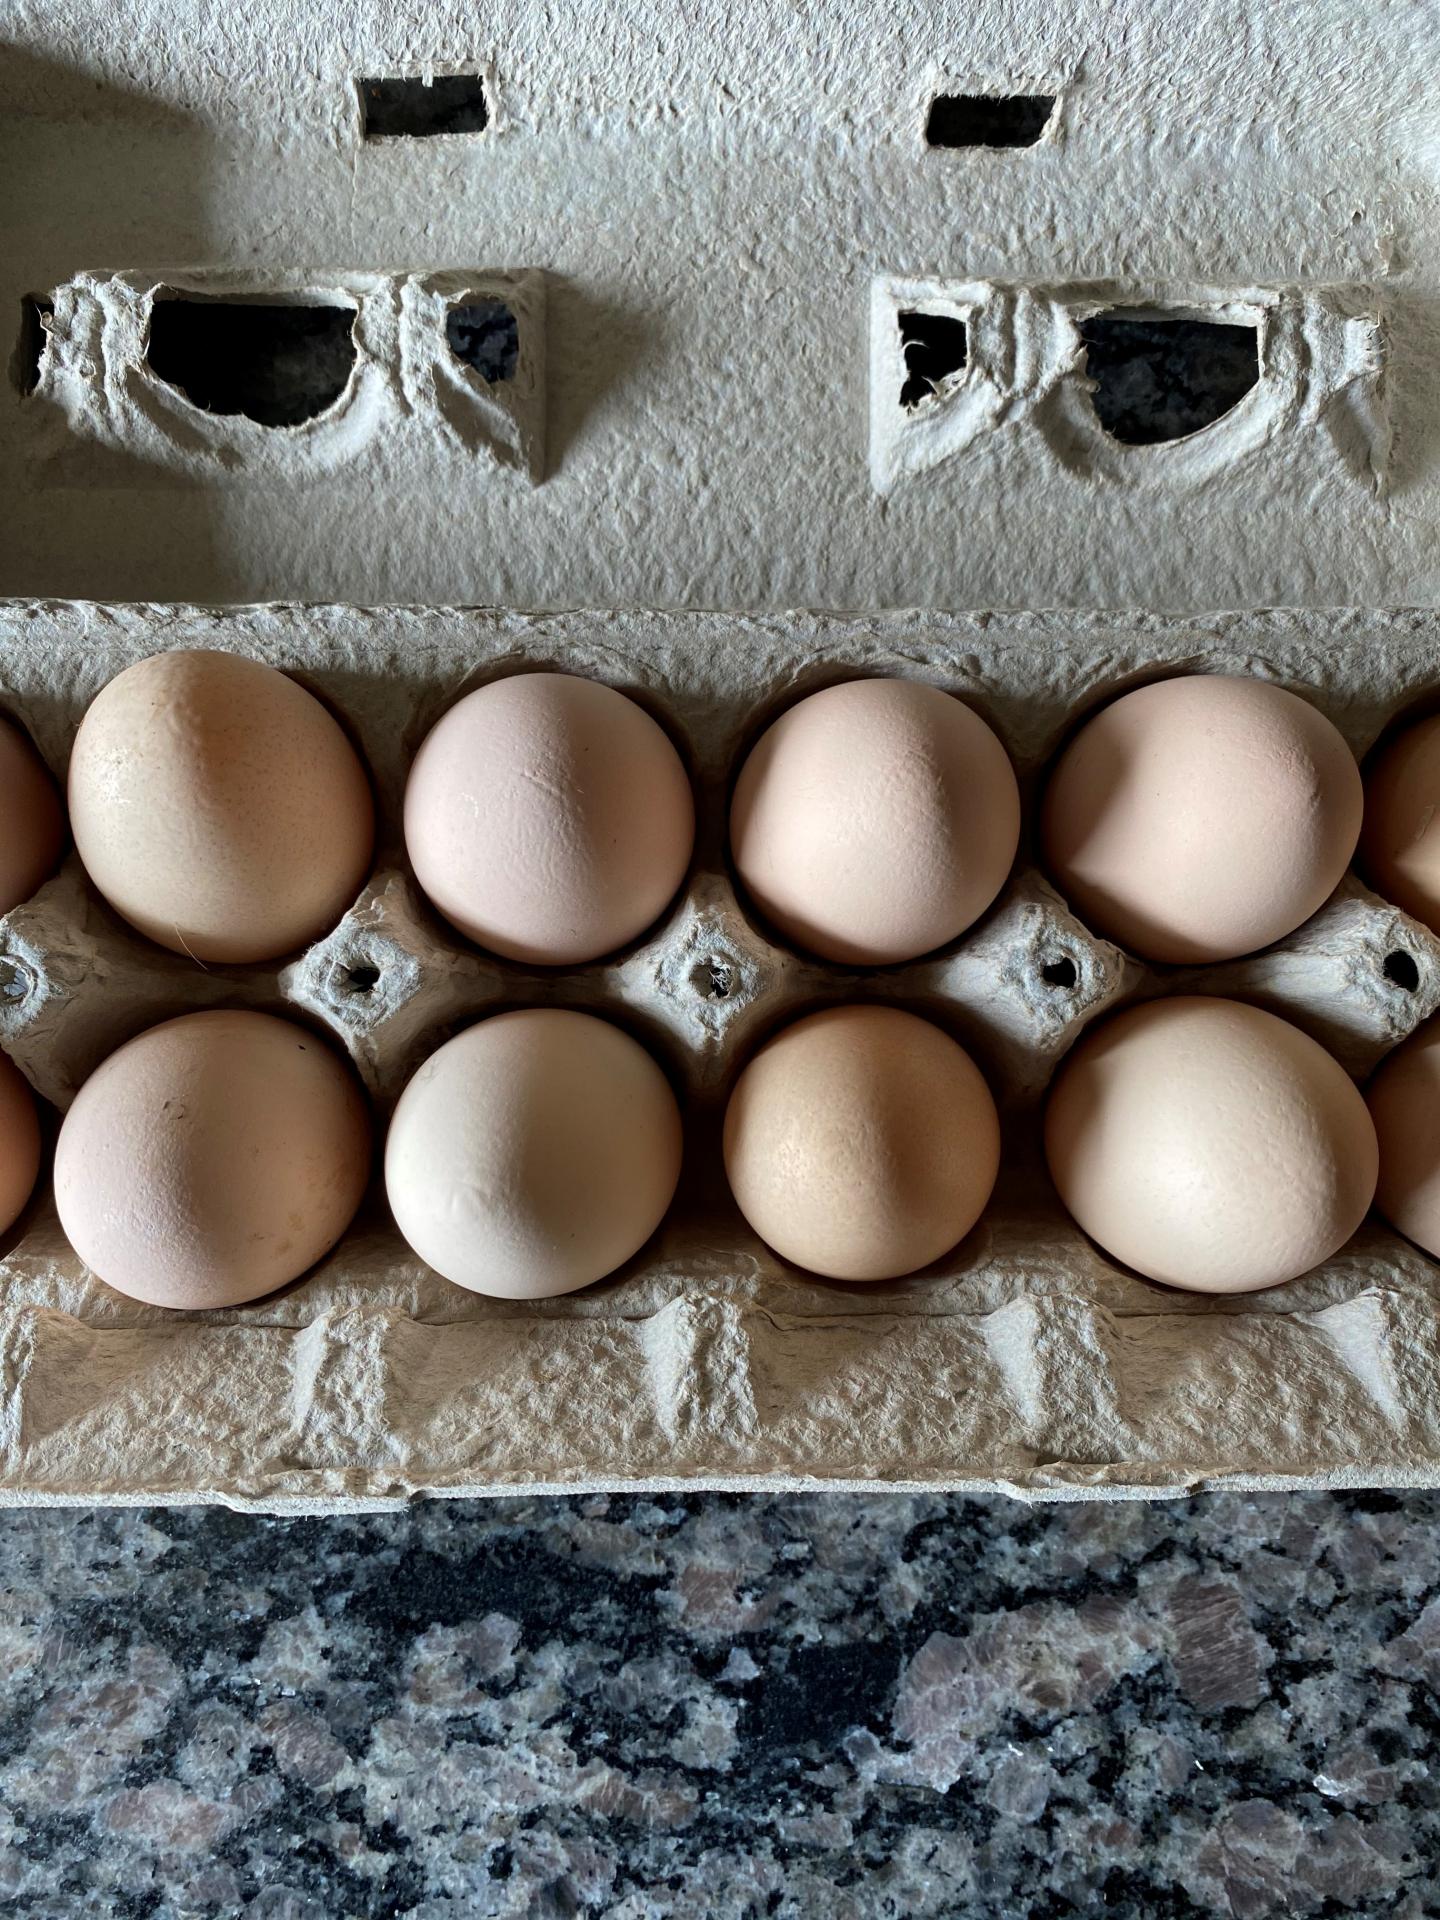 Homegrown eggs